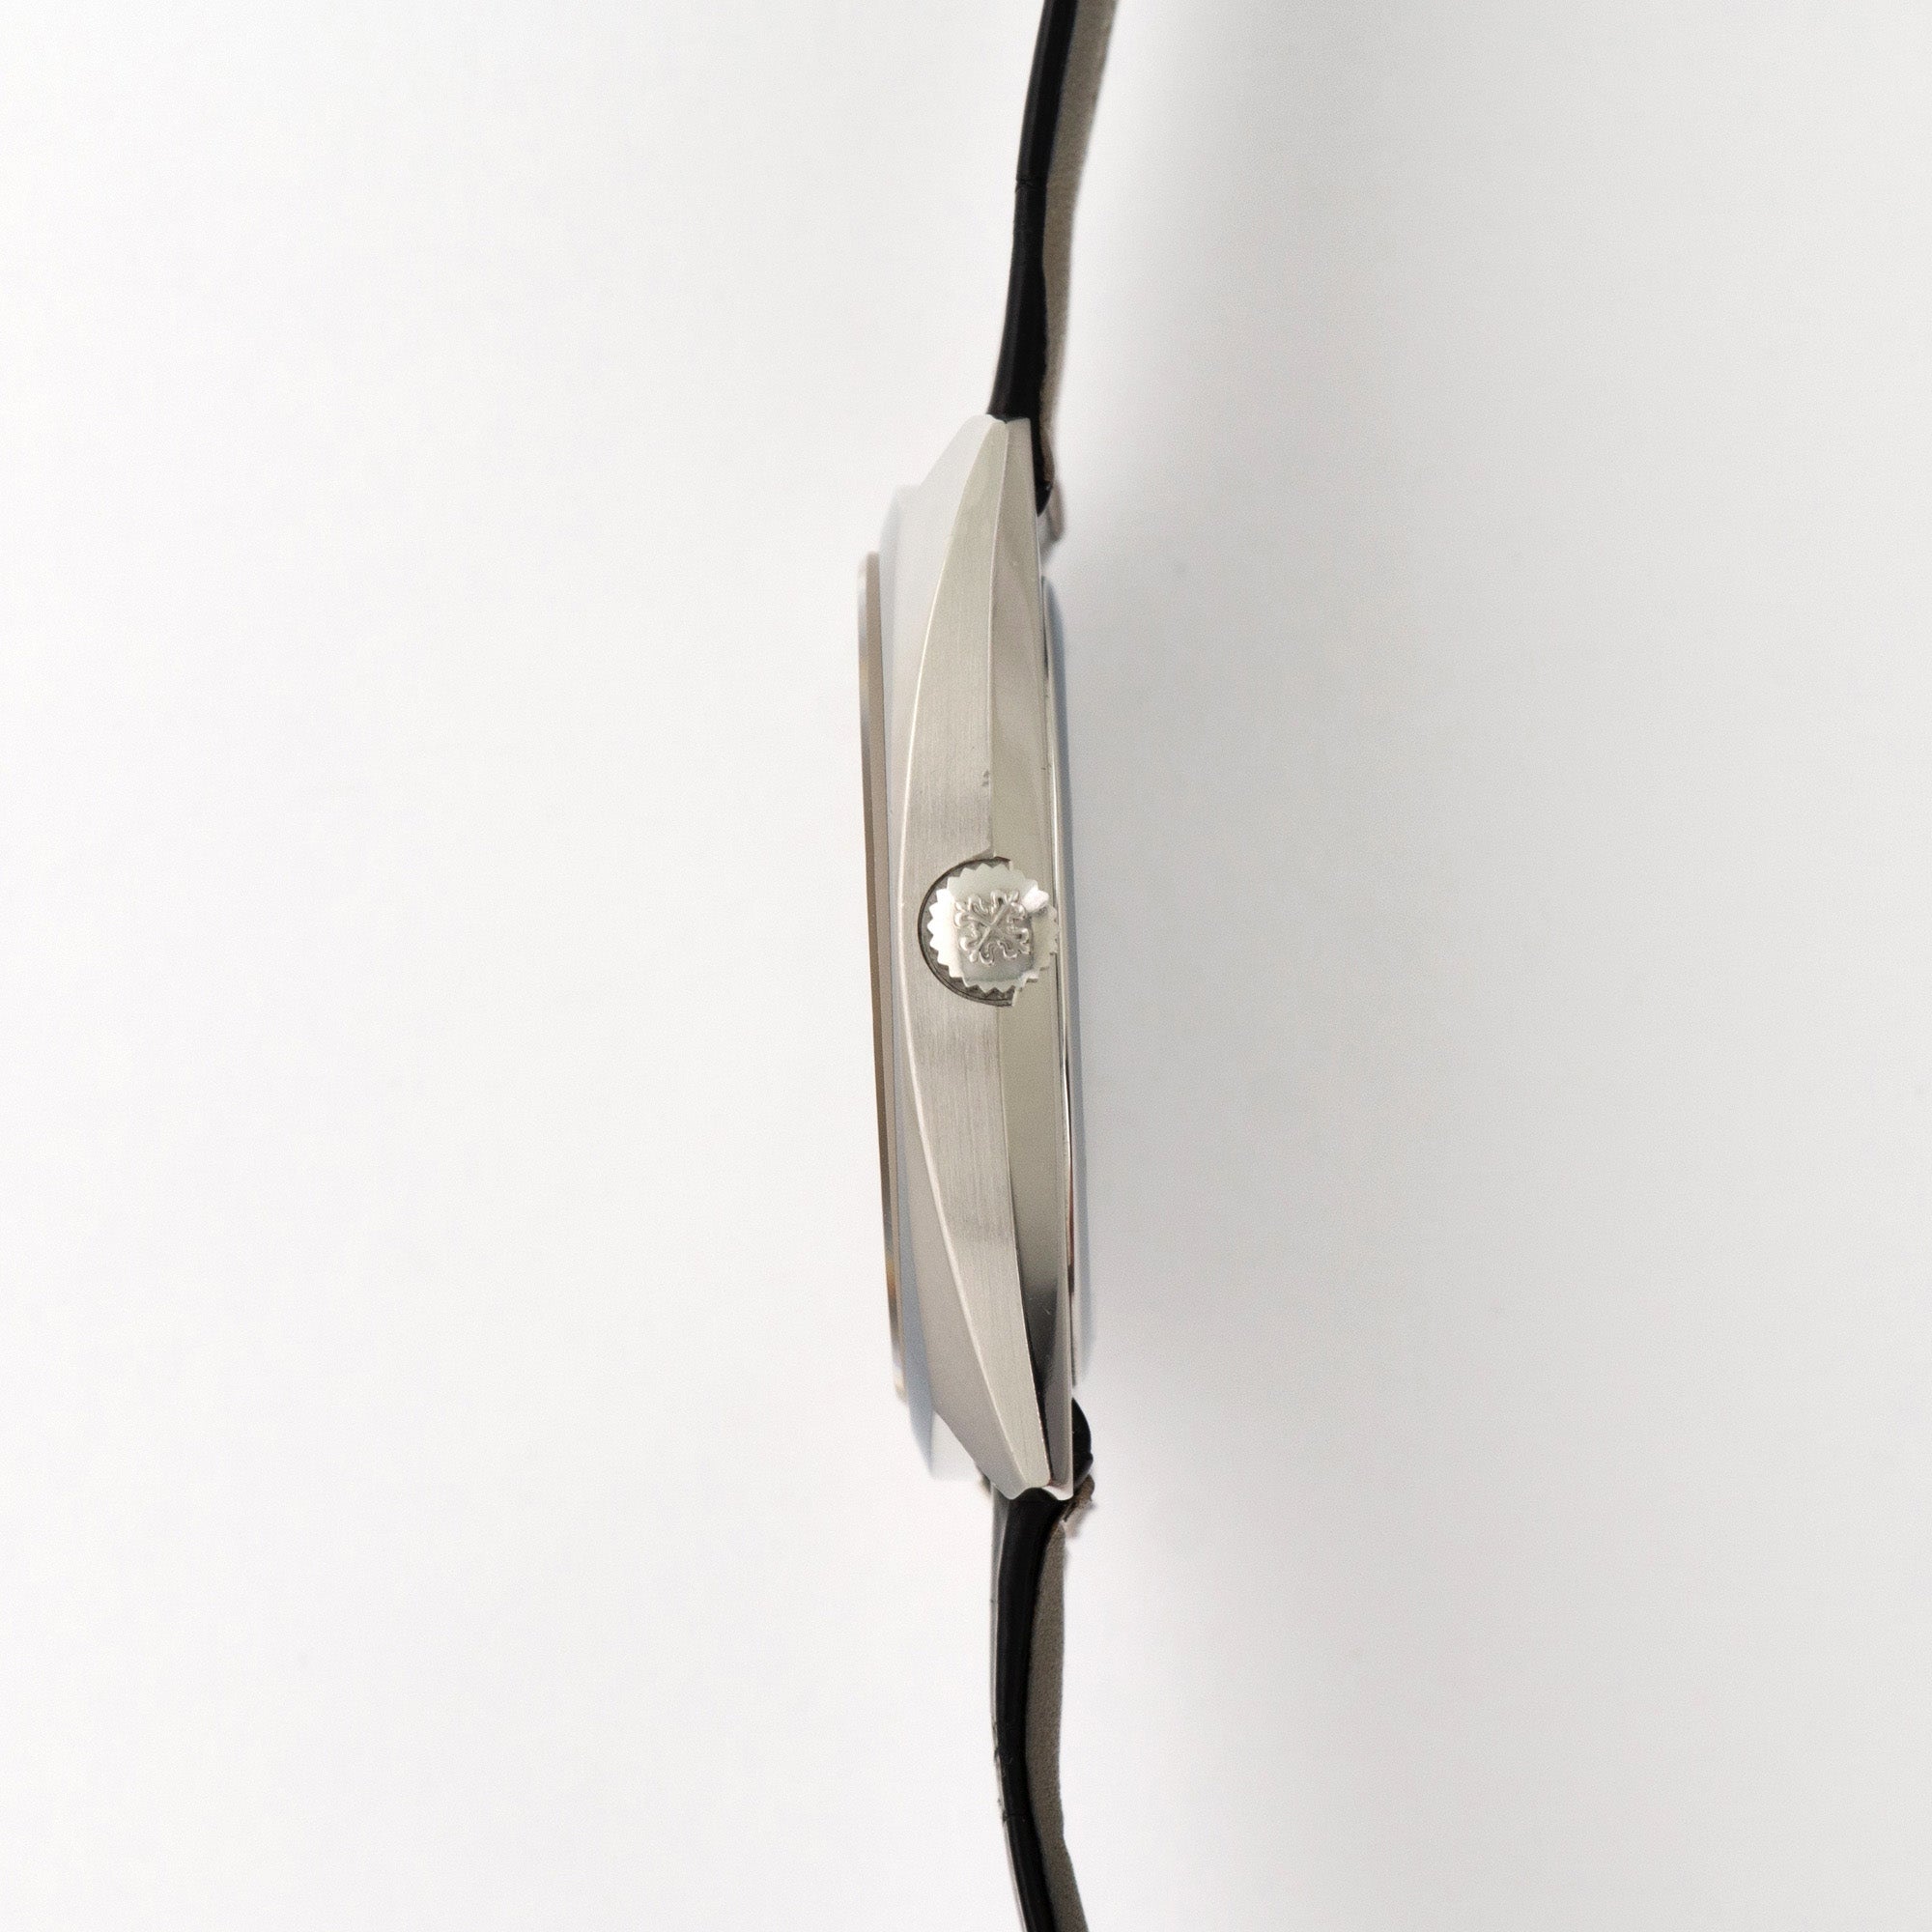 Patek Philippe - Patek Philippe Steel Tonneau Waterproof Watch Ref. 3579 - The Keystone Watches